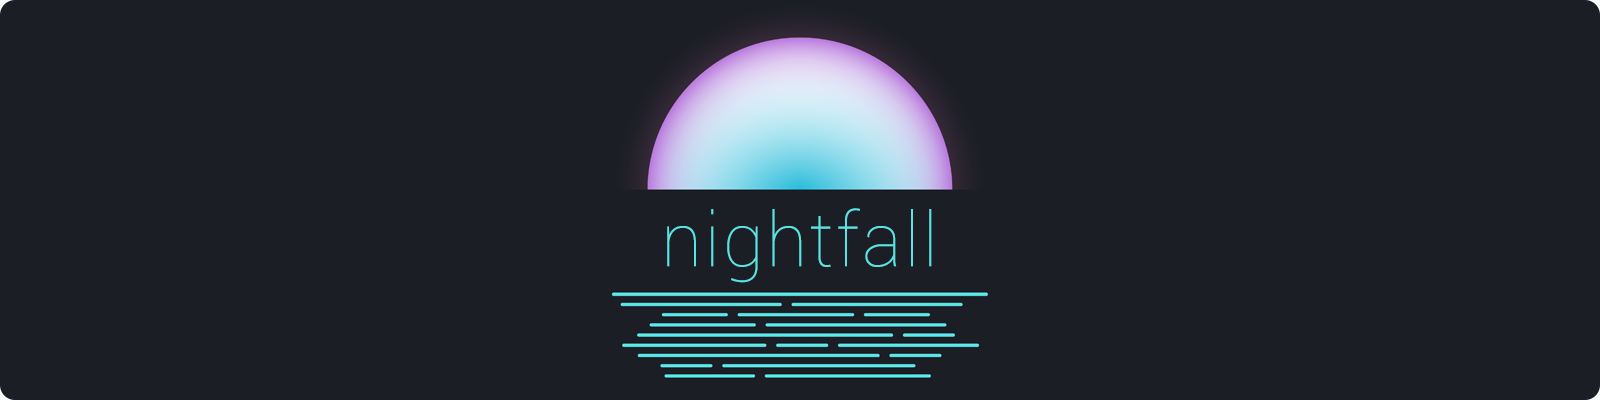 nightfall banner